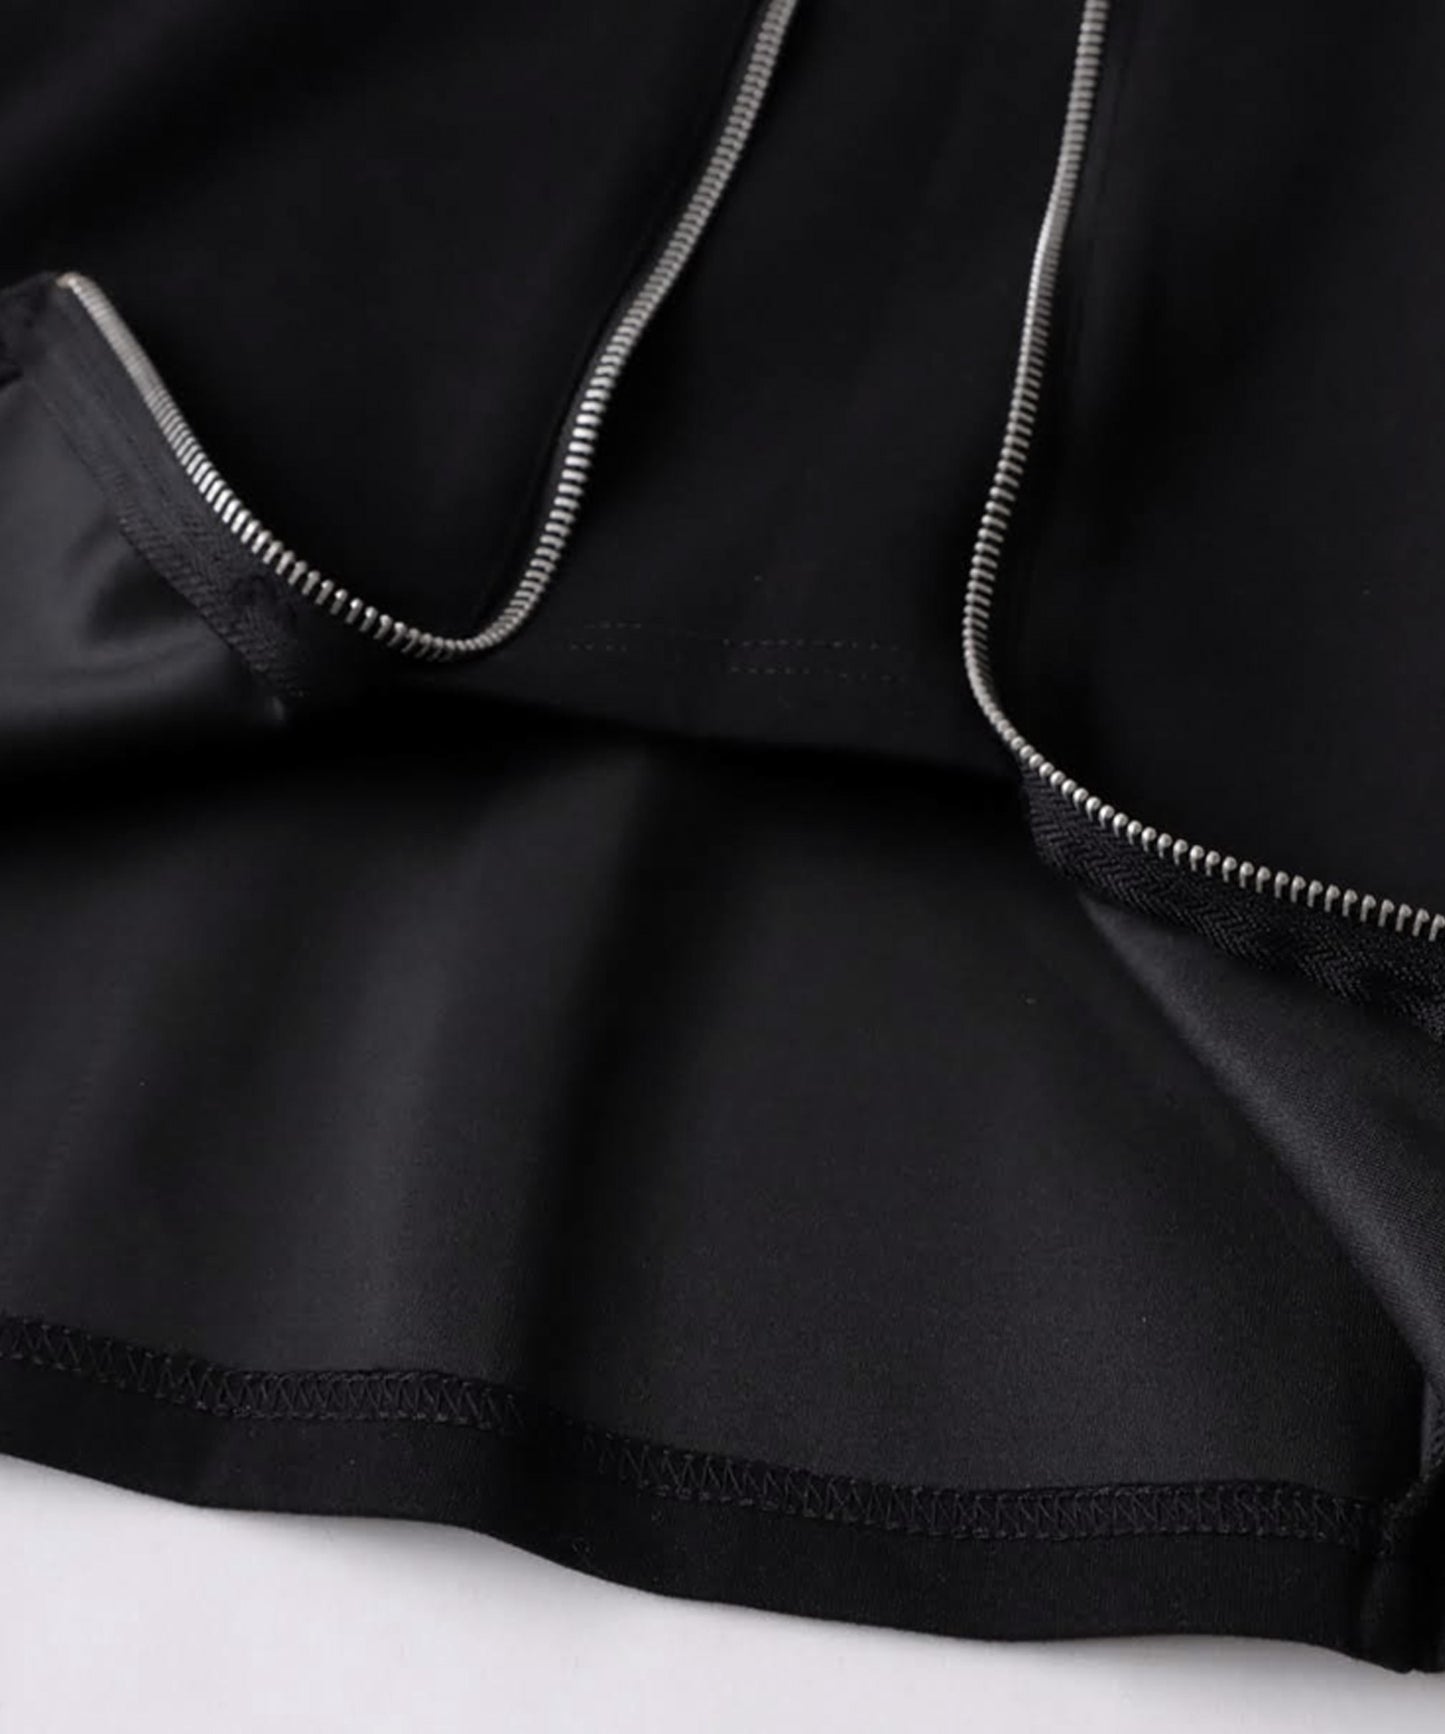 Zip Design Ladies Skirt Long